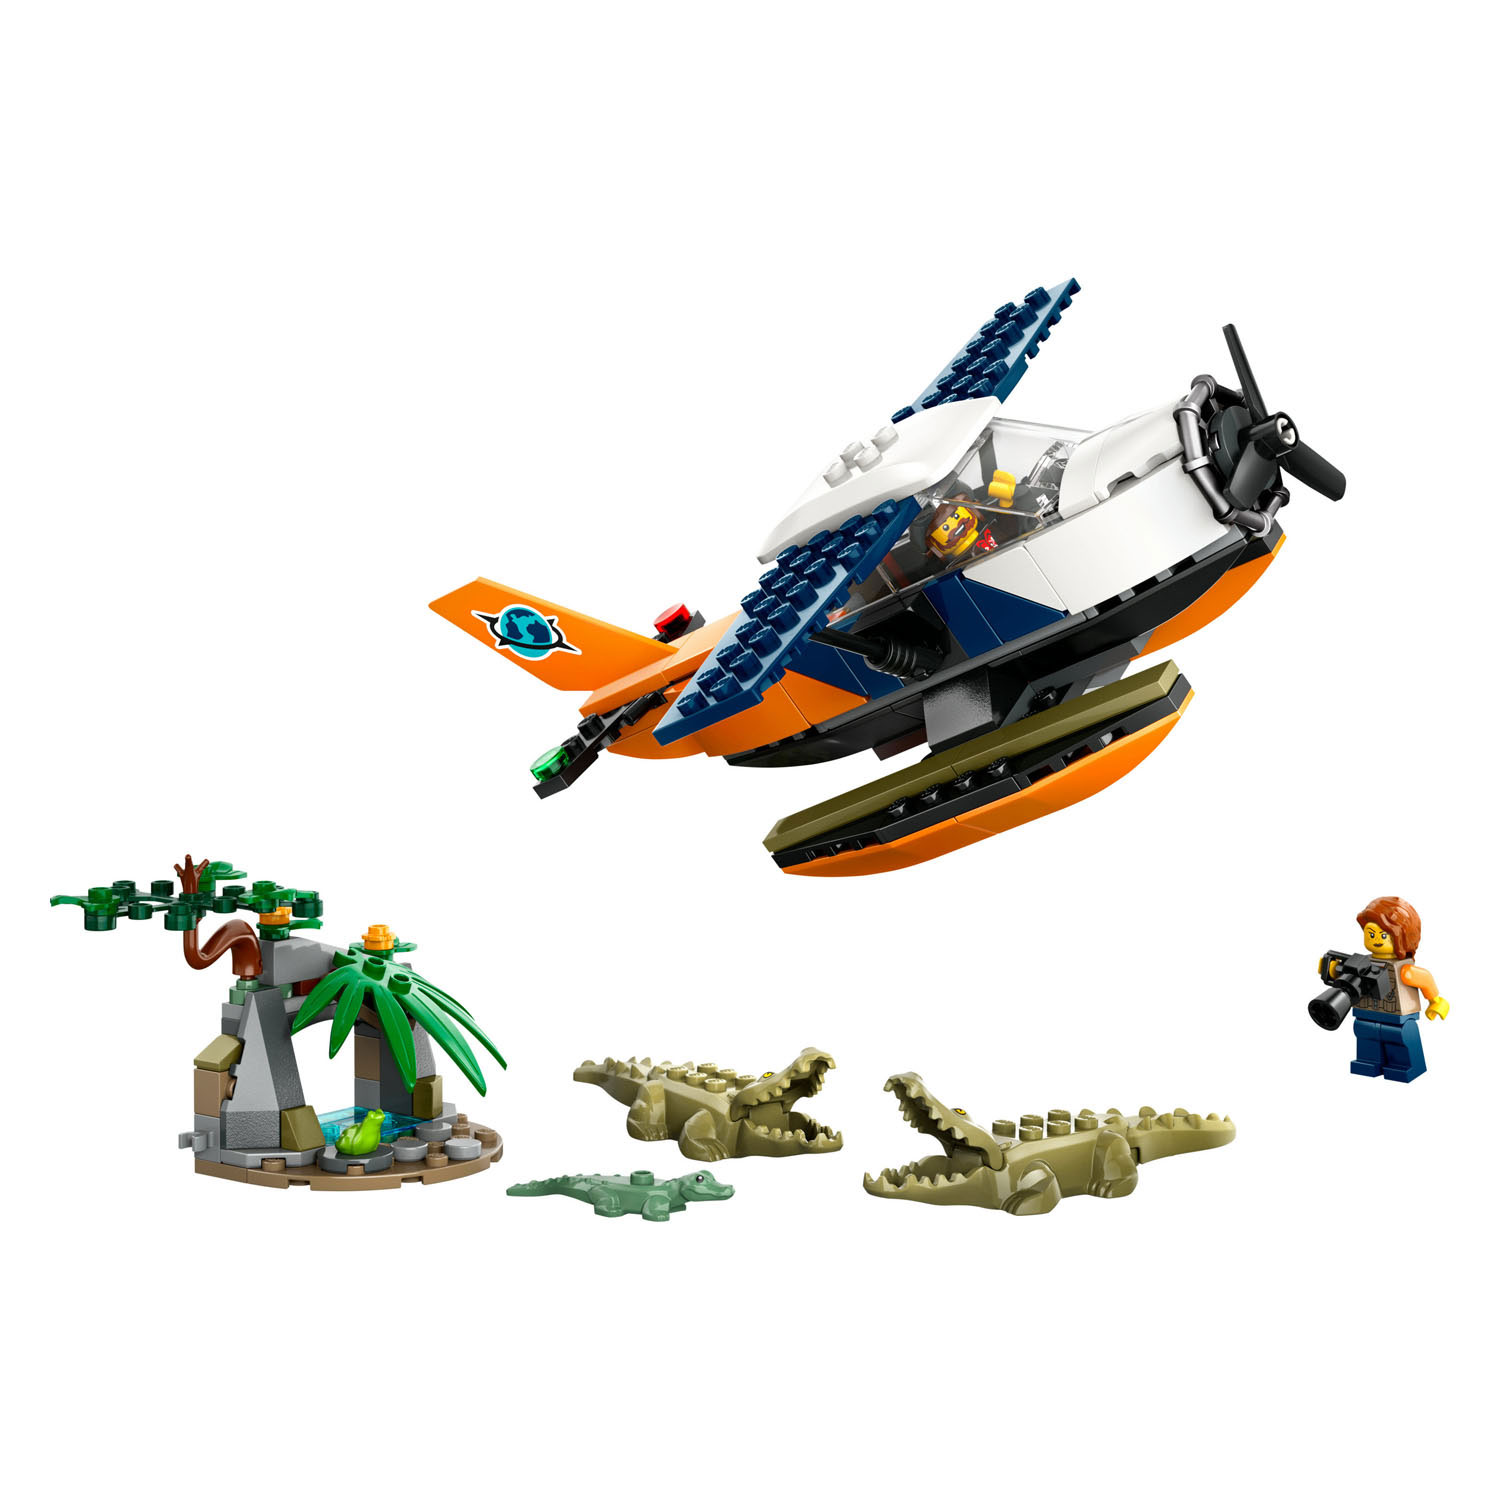 LEGO City 60425 Jungleonderzoekers: Watervliegtuig